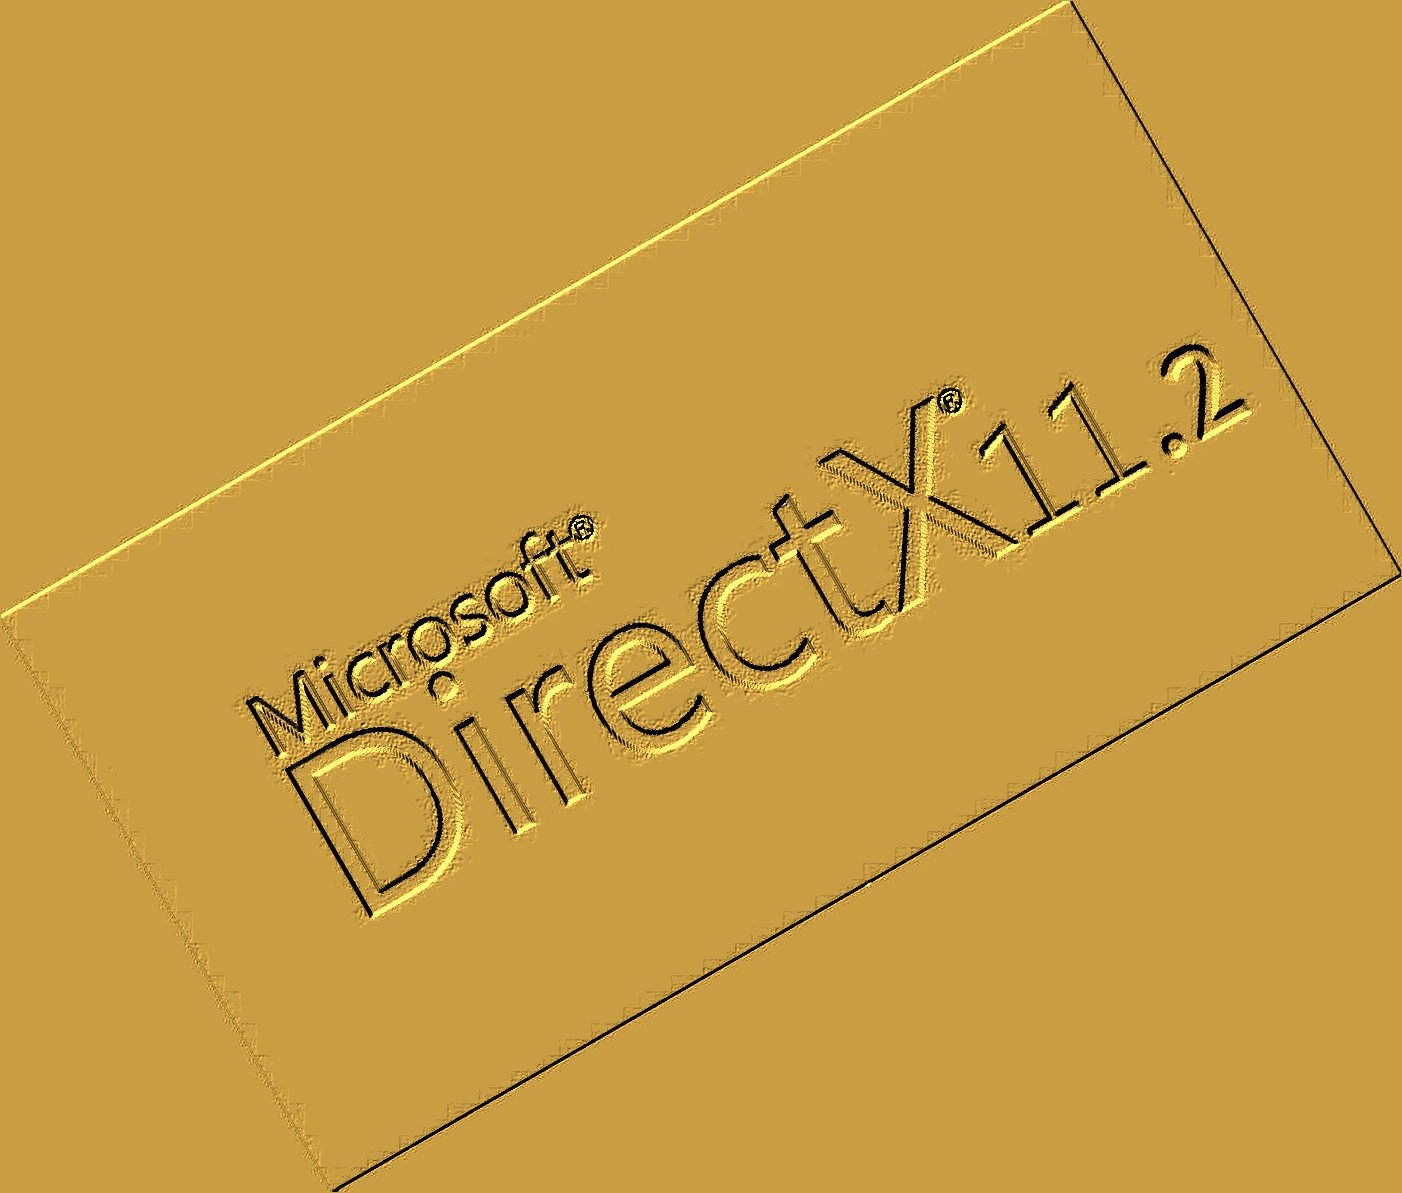 Directx 11 Full File Download Windows 8 64 Bit Free